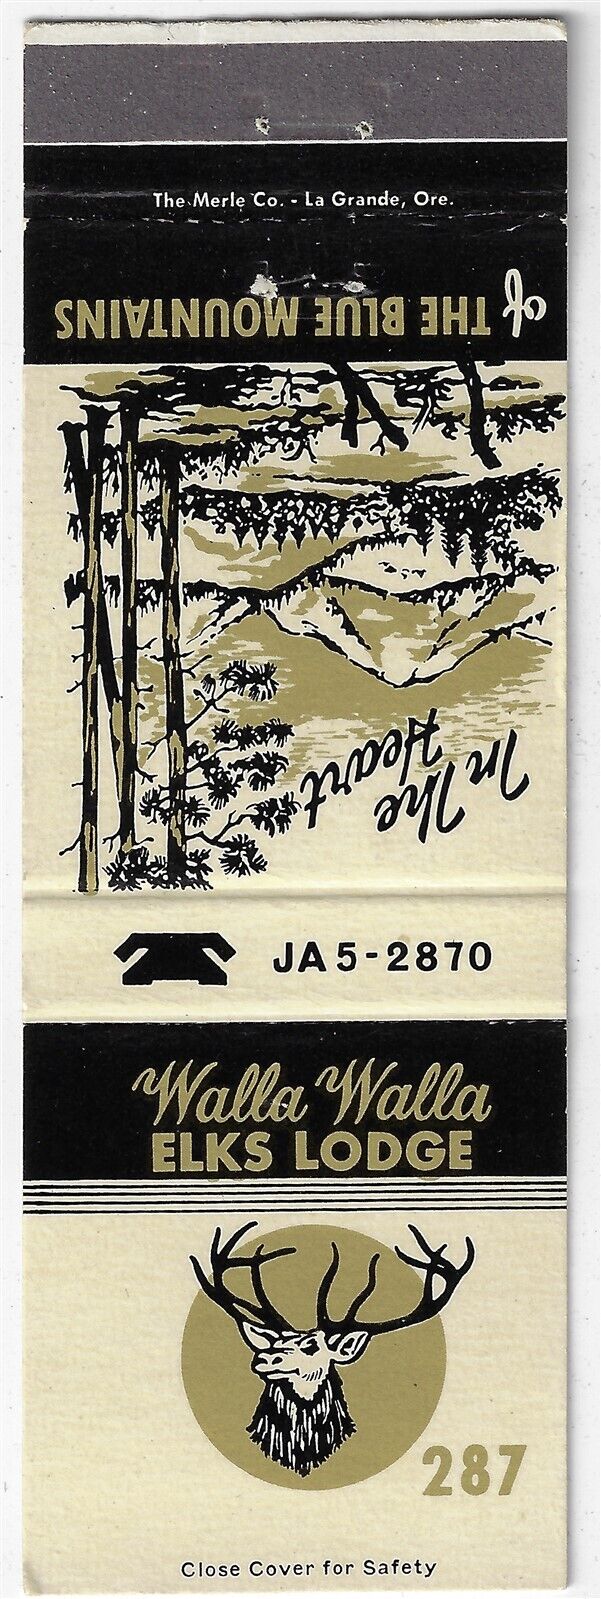 Walla Walla Elks Lodge 287 Ph JA 5-2870 Blue Mountains FS Empty Matchcover